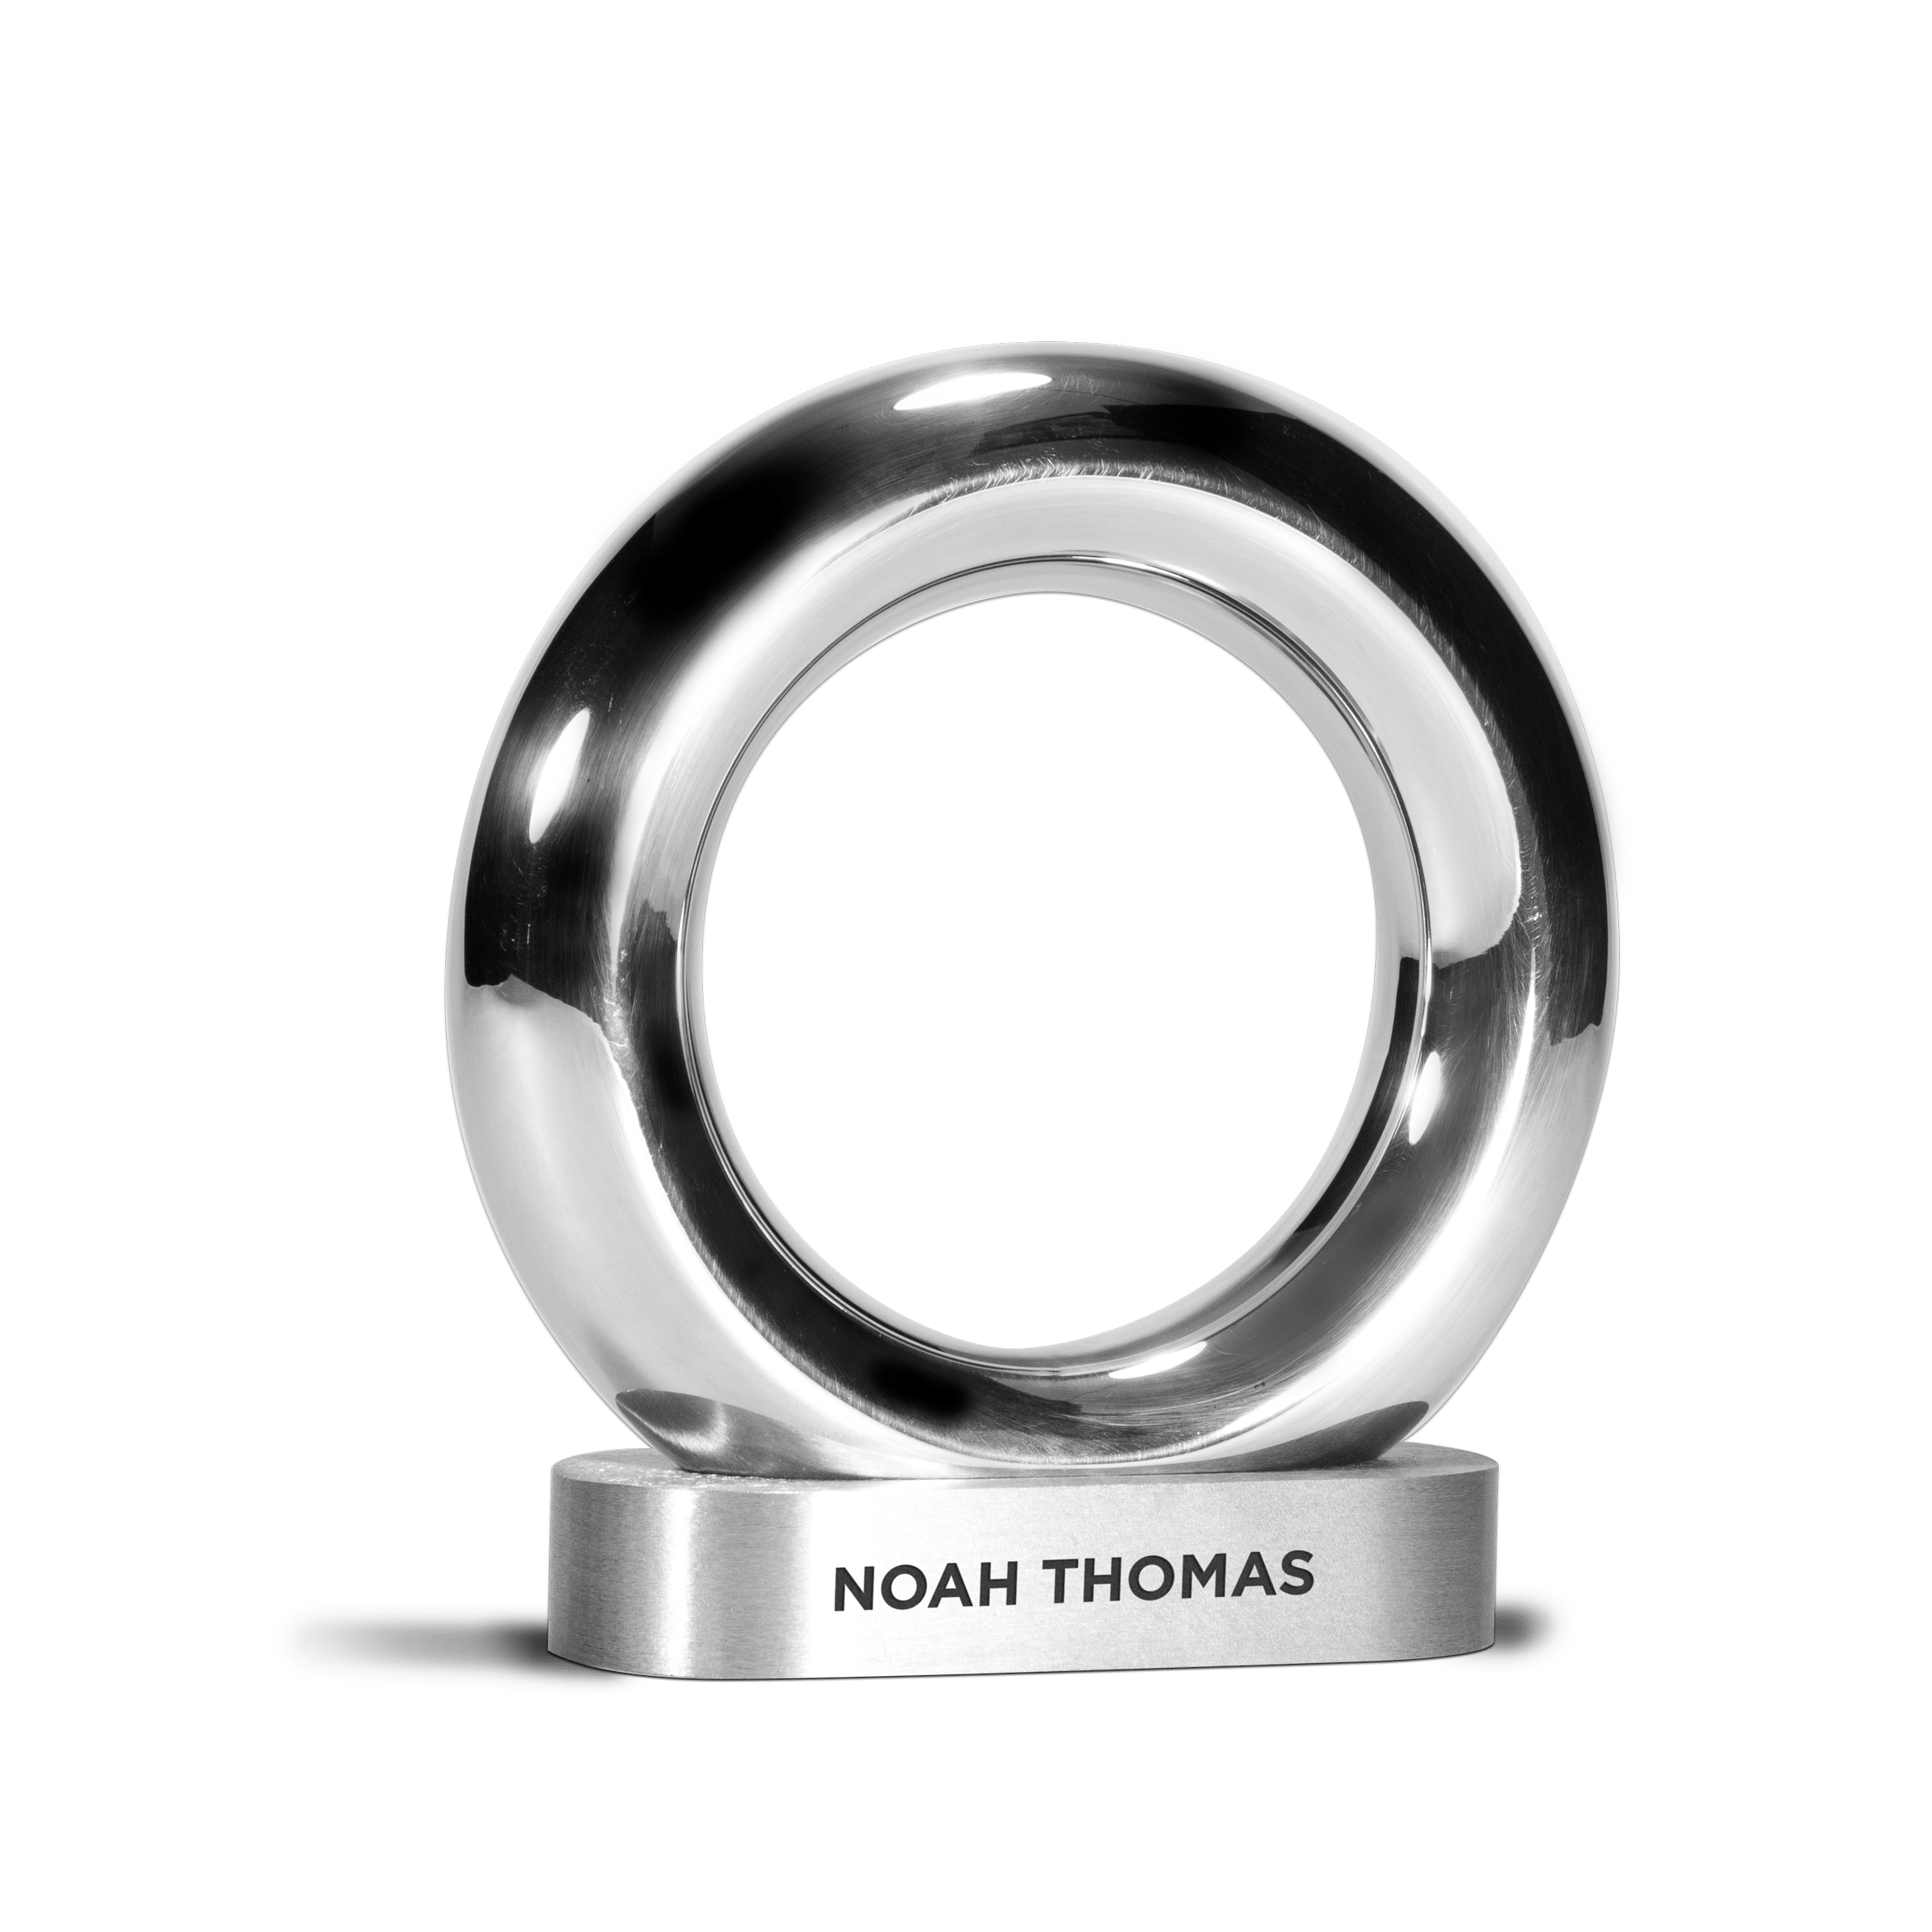 Noah Thomas sustainable award